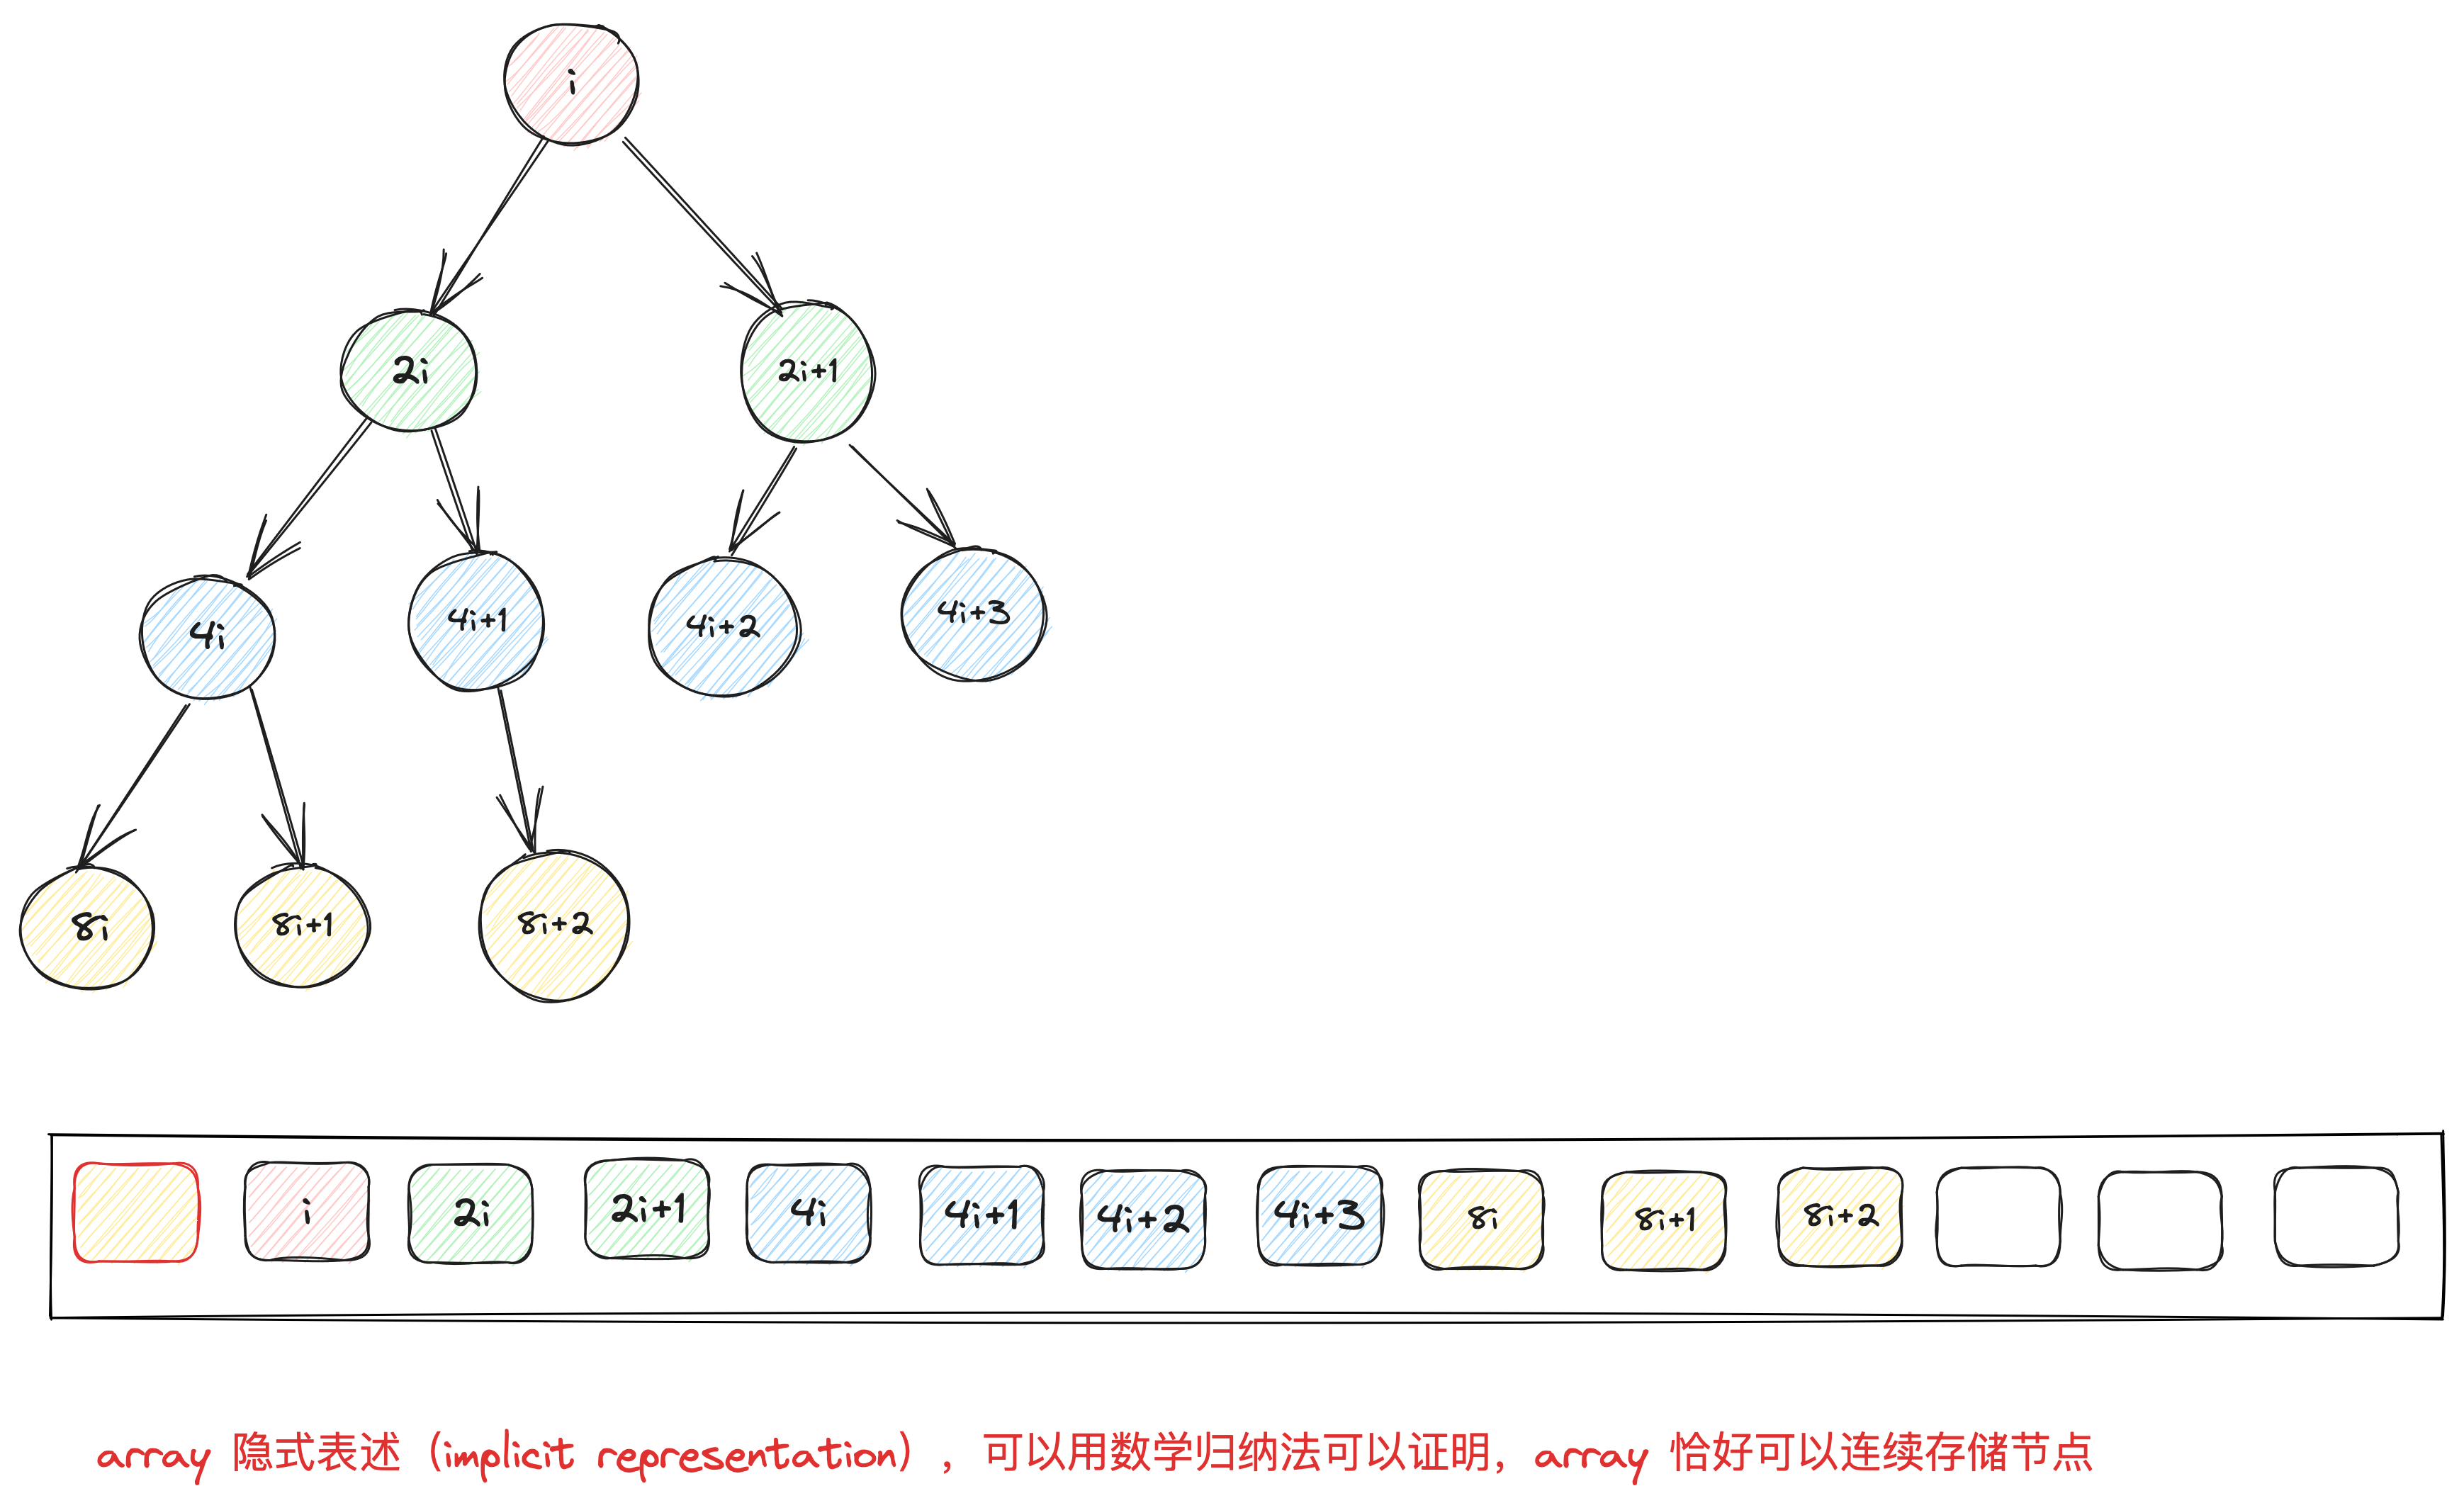 complete binary tree array